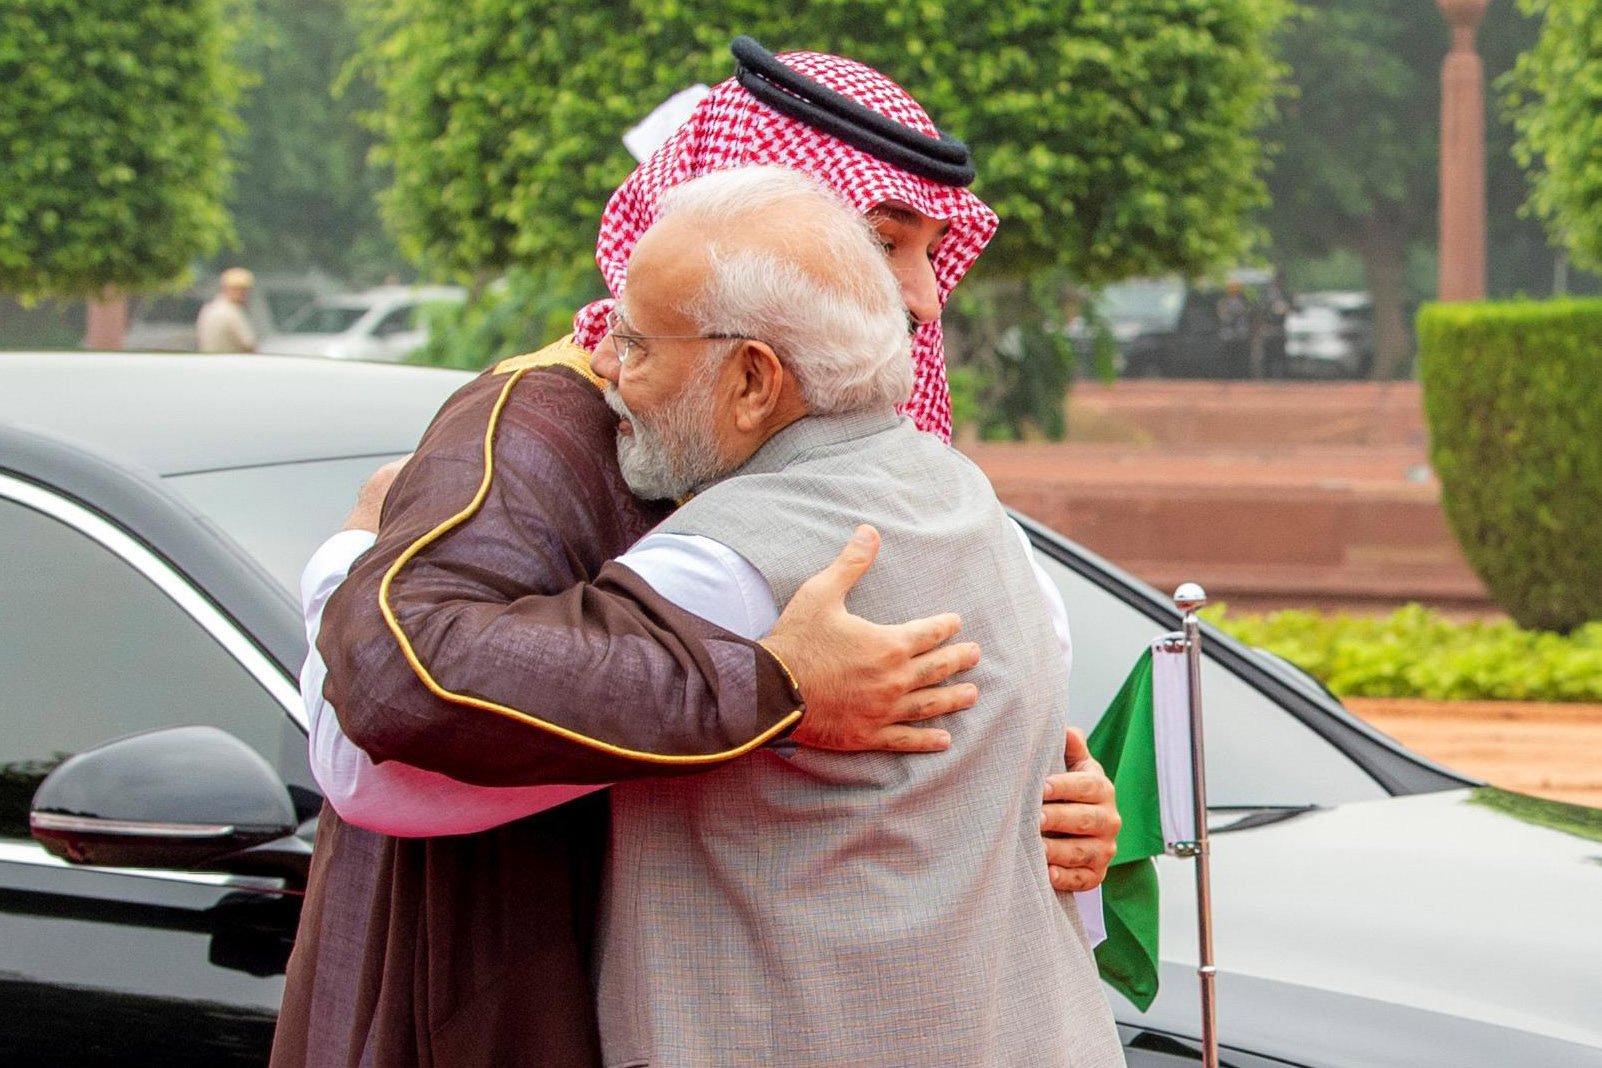 Indian Prime Minister Narendra Modi embraces Saudi Arabia’s Crown Prince Mohammed bin Salman before their bilateral meeting at Hyderabad House on Monday. Photo: Saudi Press Agency/dpa